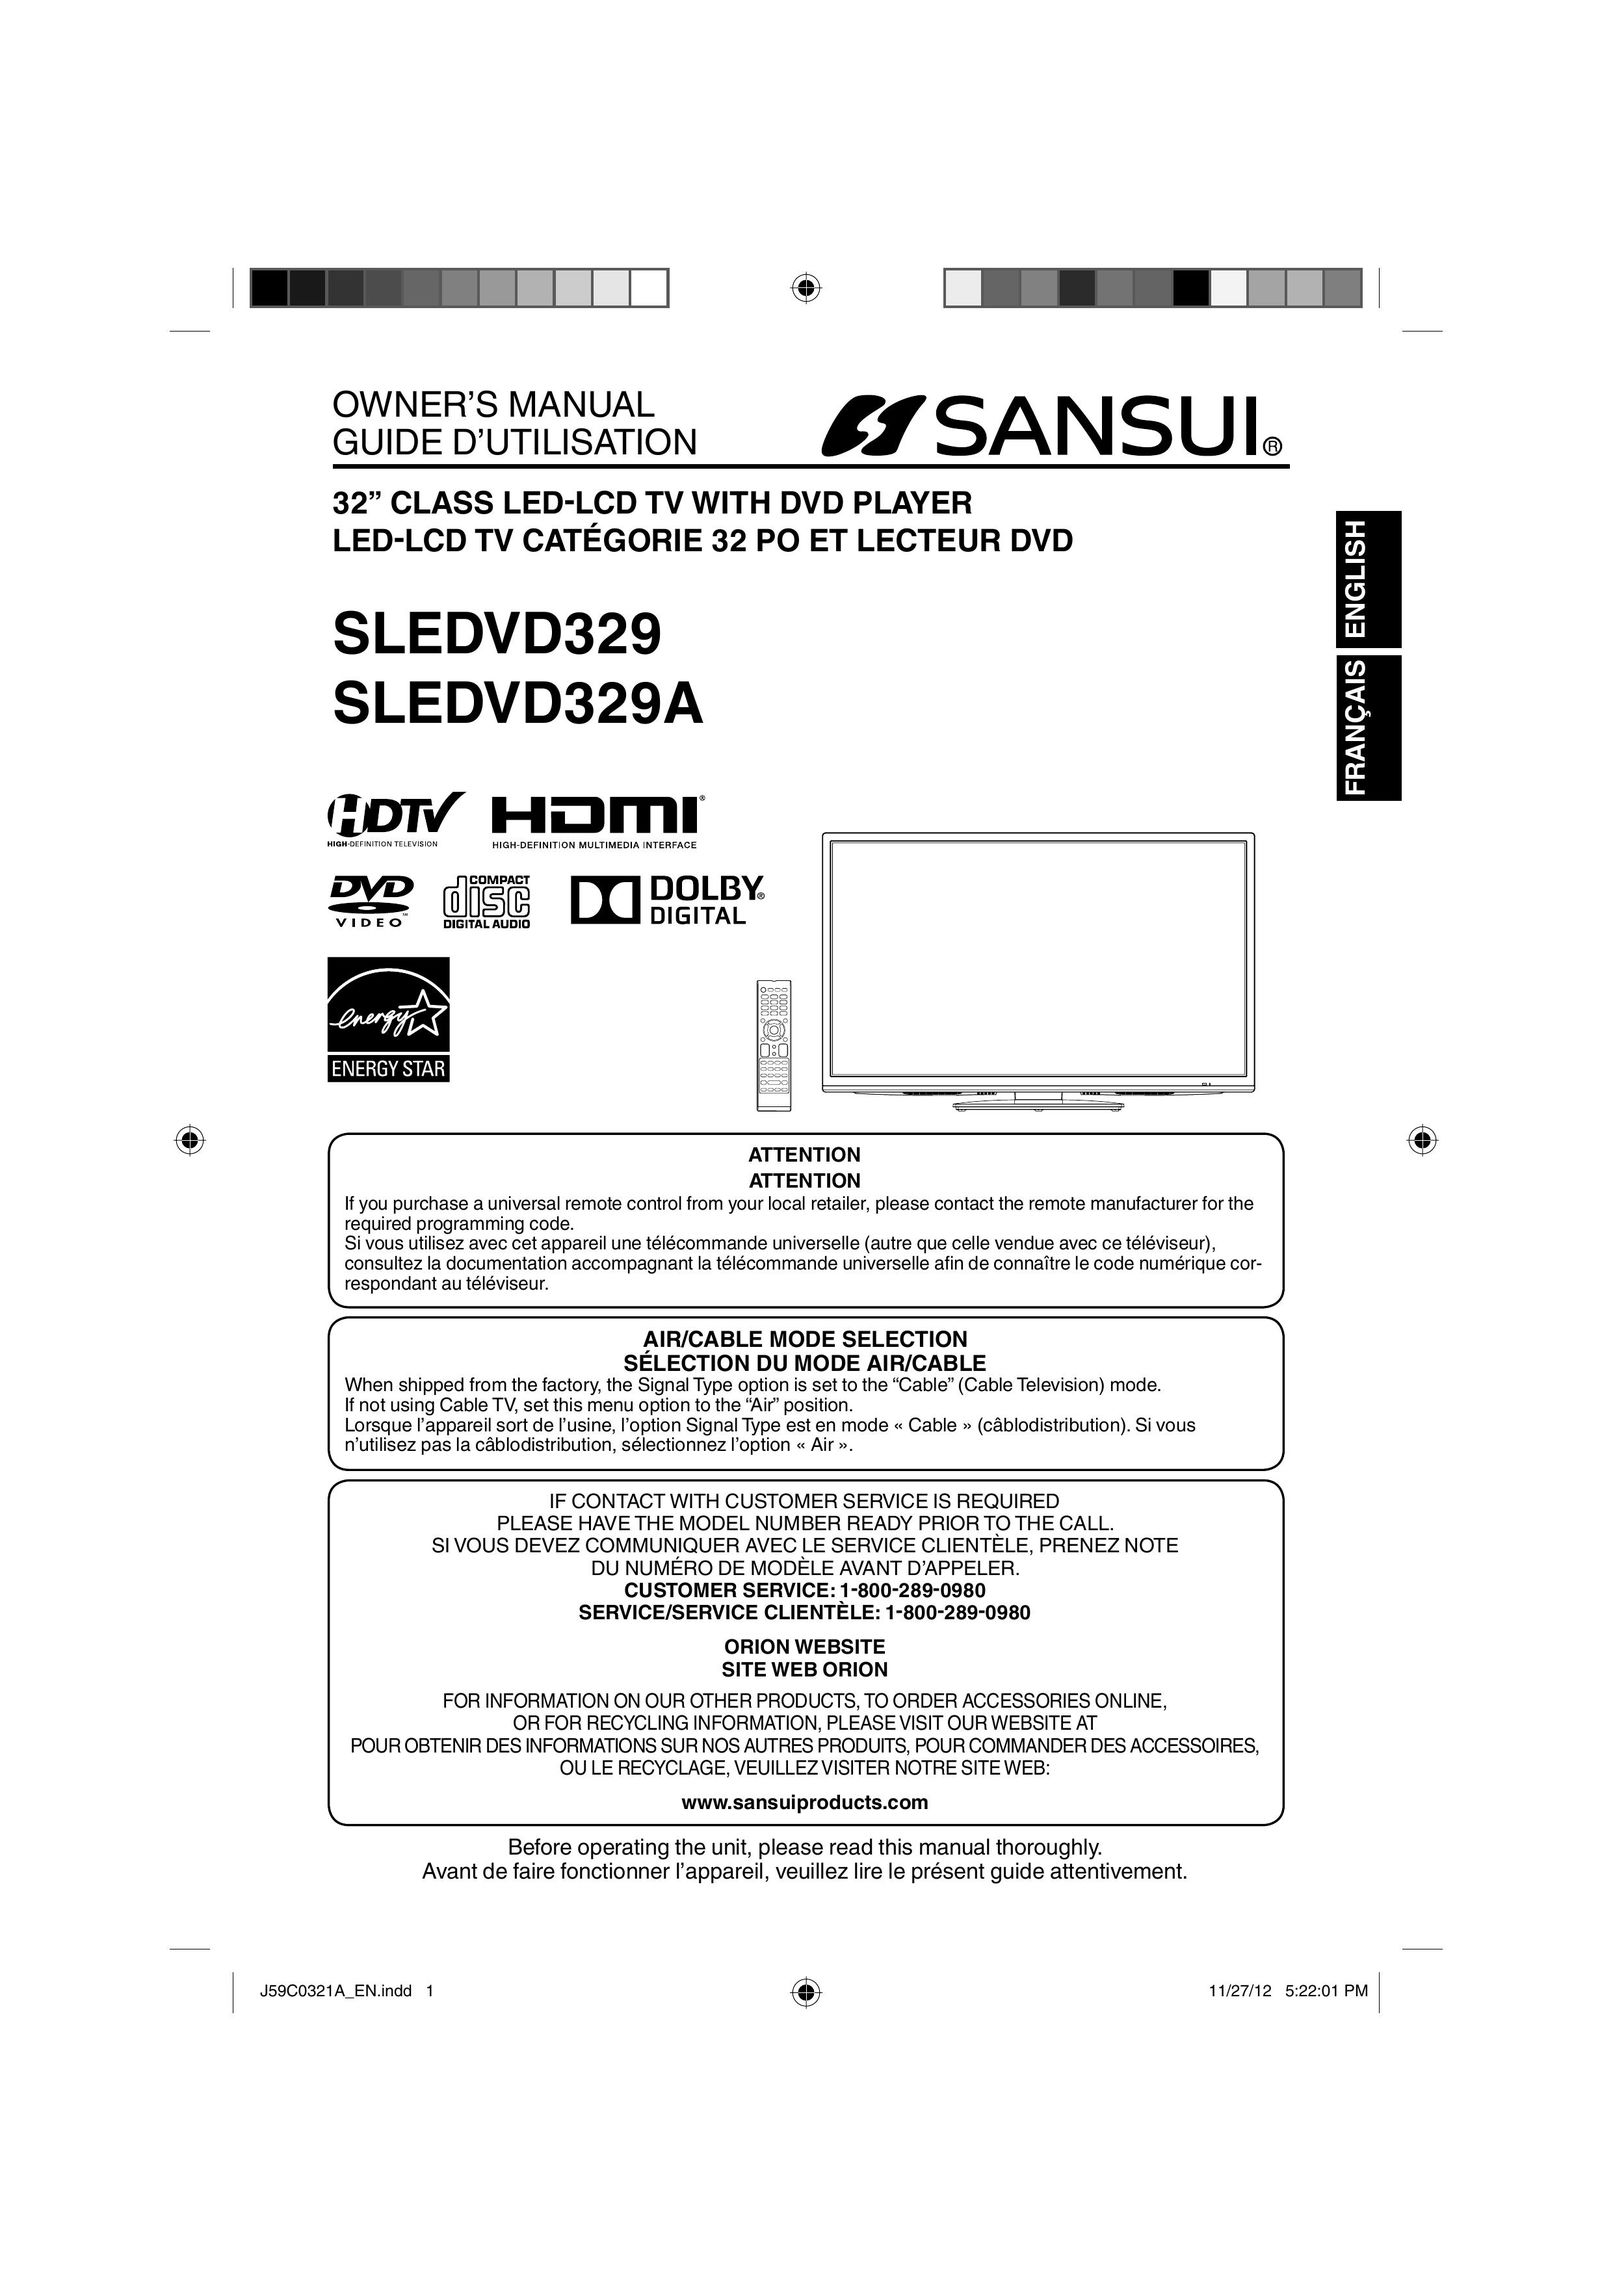 Sansui SLEDVD329 Flat Panel Television User Manual